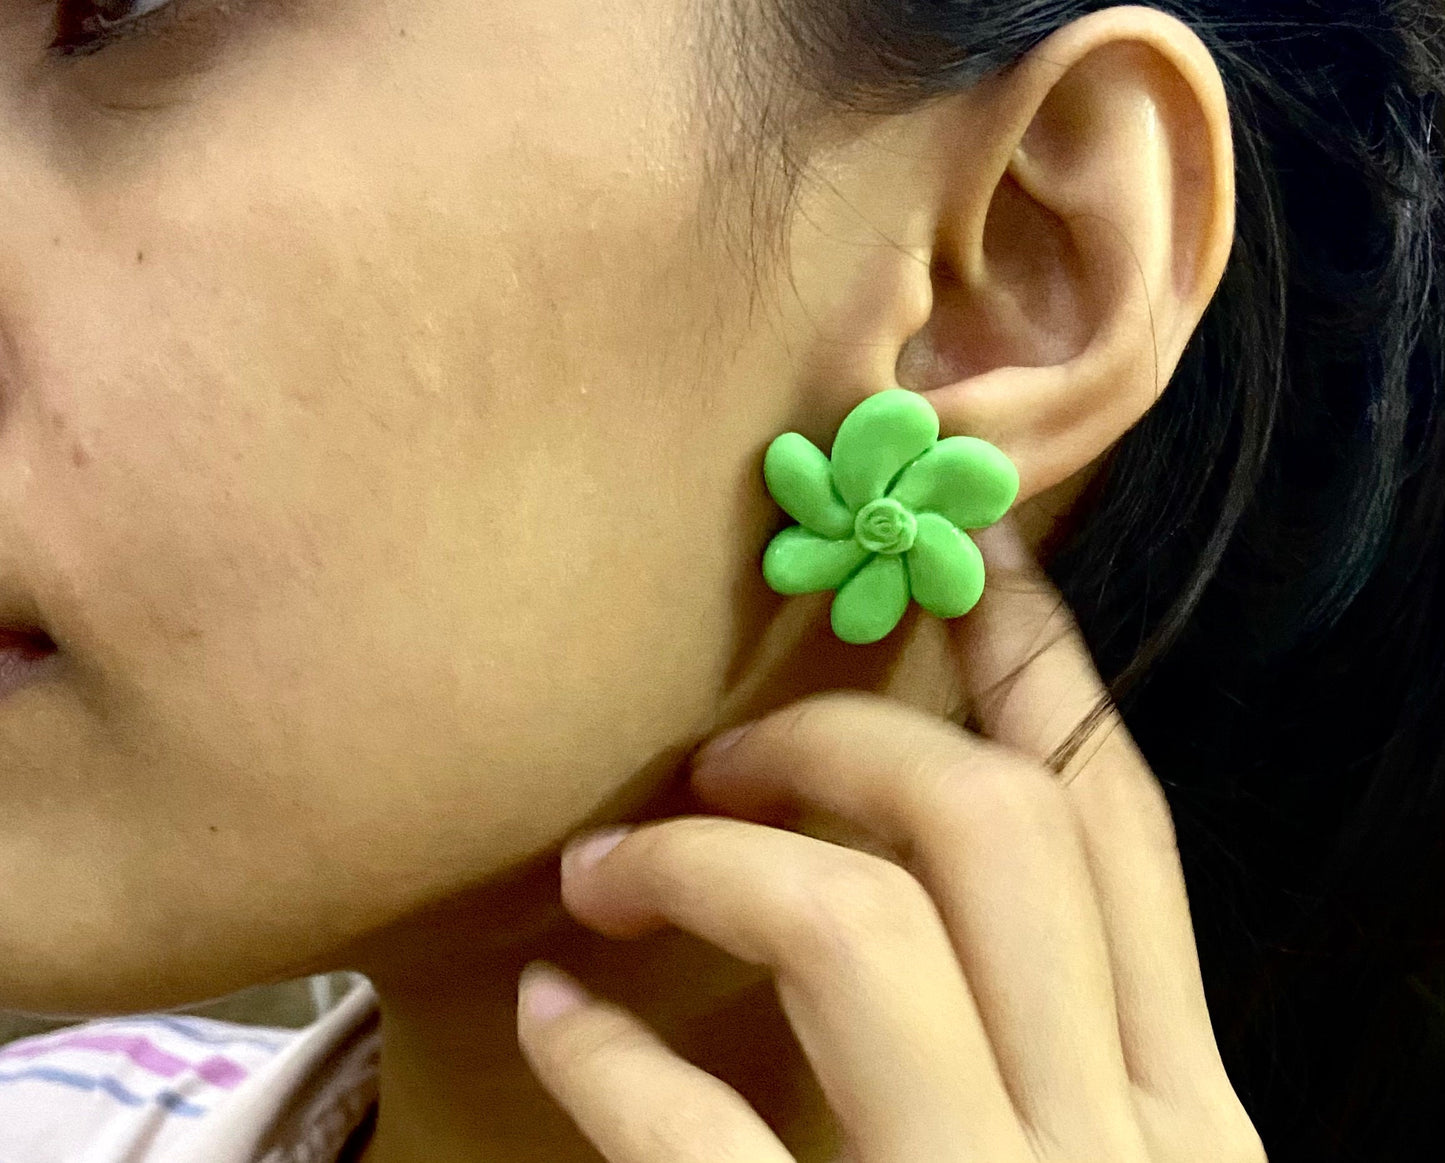 Ariana Grande inspired flower earrings, studs, green floral earrings, positions earrings